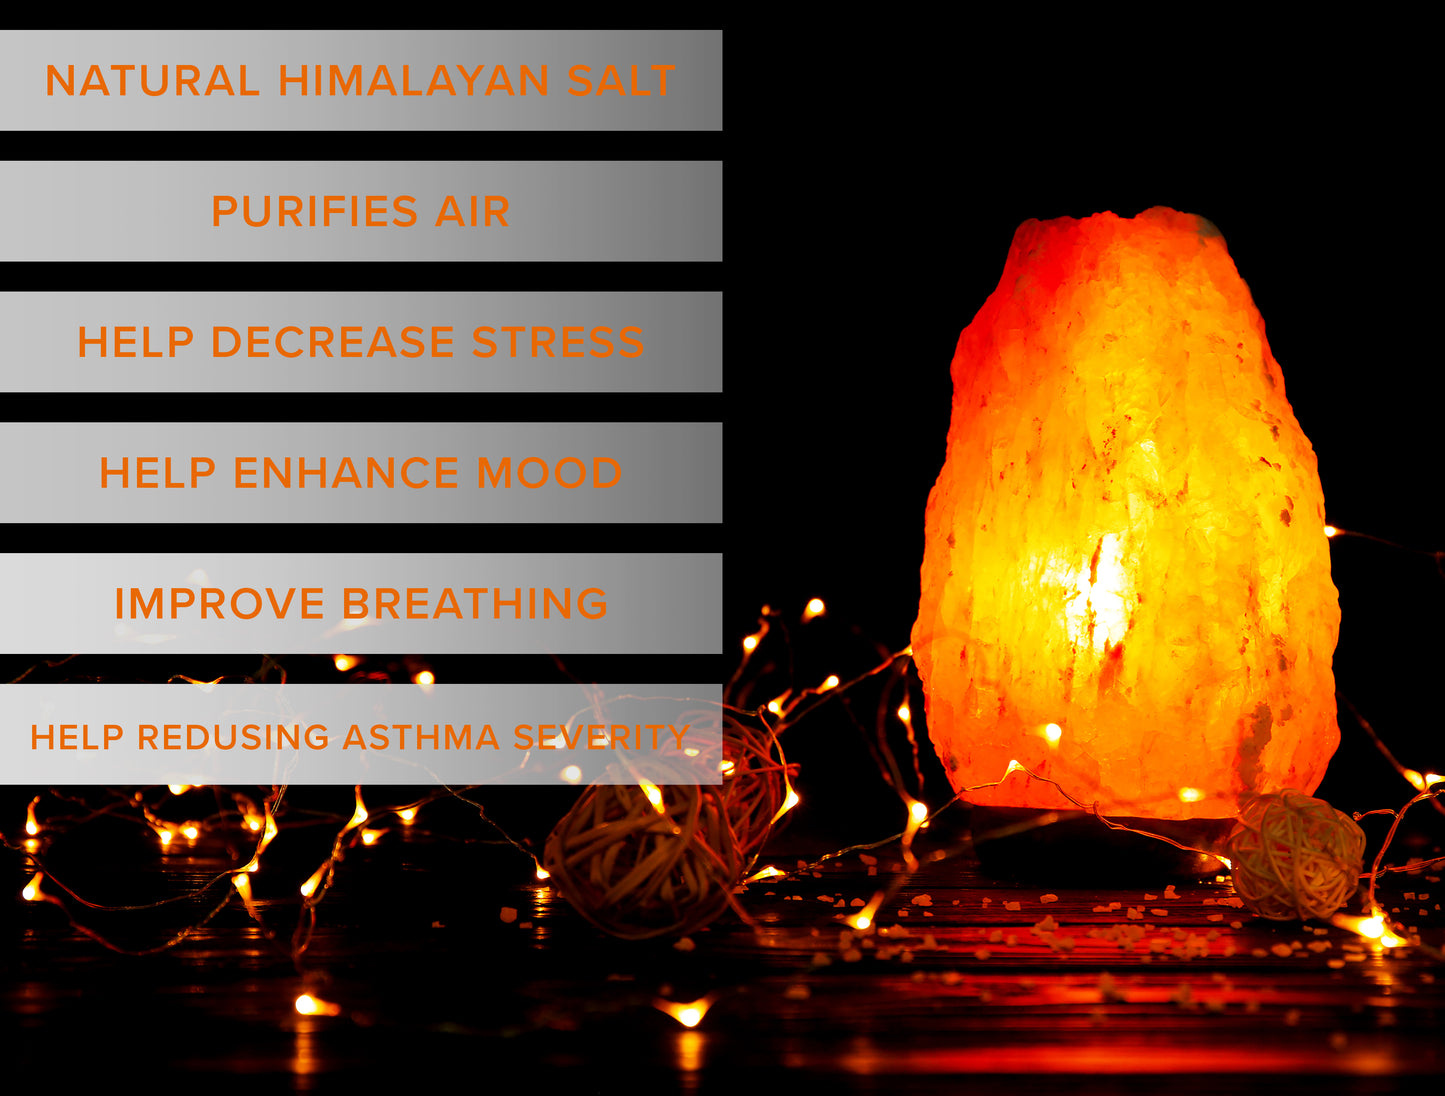 FXF Sports  1-4KG Salt Lamp | Premium 100% Natural Himalayan Salt Lamp Hand Crafted Wooden Base Salt Lamps Himalayan | Pink Salt Lamp | Bedside Lamp | Rock Salt Lamp Night Light Crystal Lamp SAD Lamp